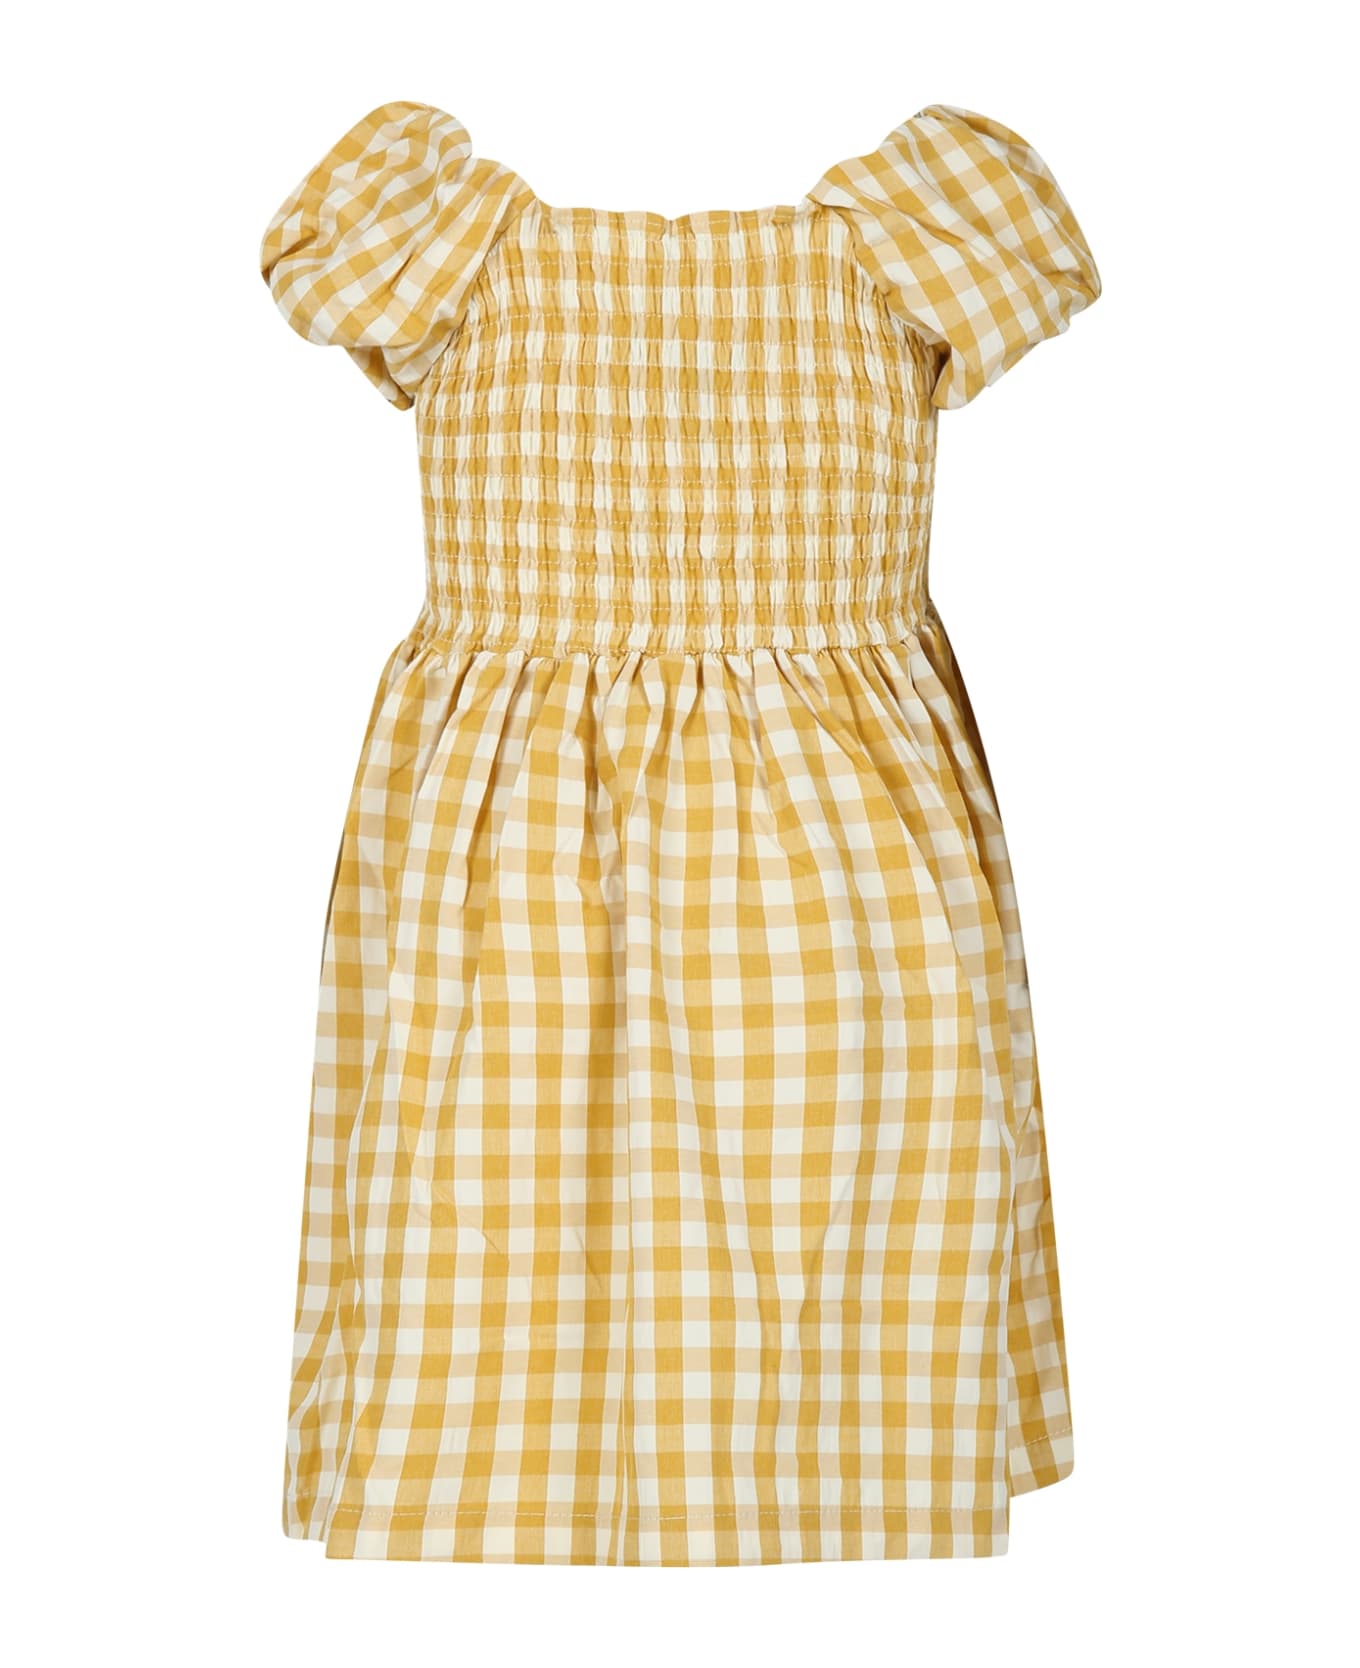 Molo Casual Yellow Dress Cherisla For Girl - Yellow